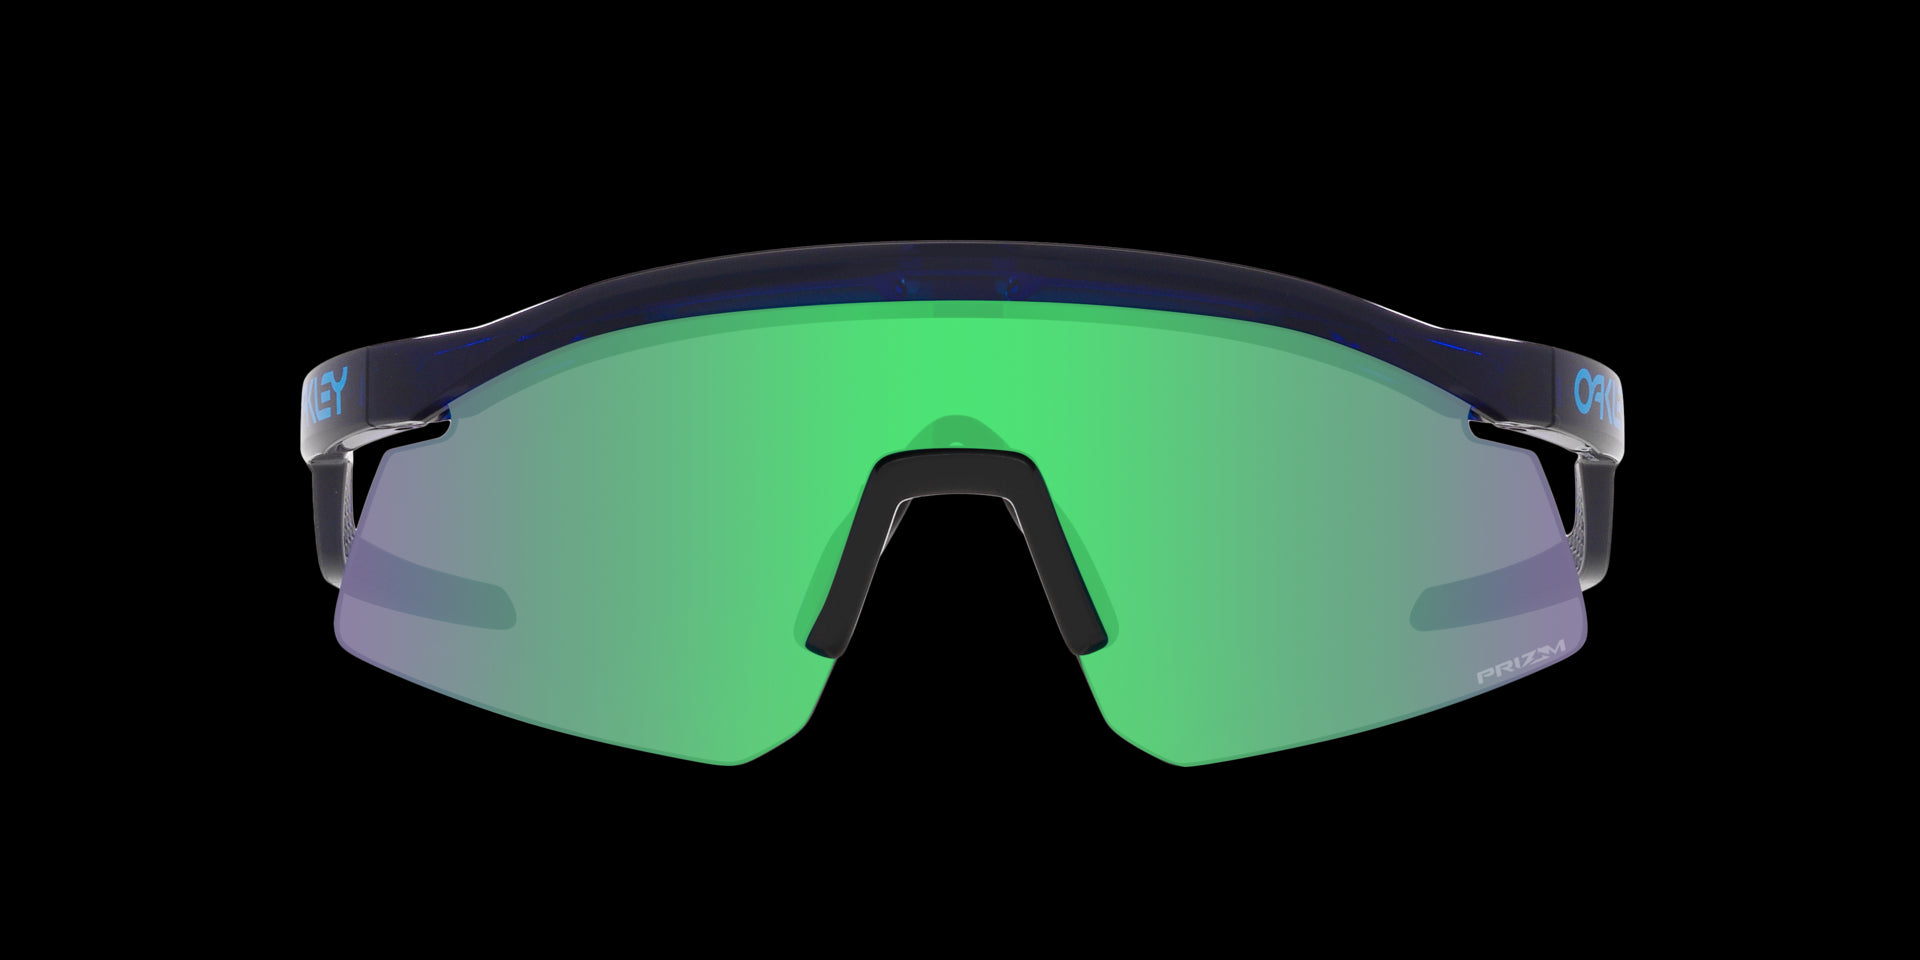 Hydra green lens sunglasses